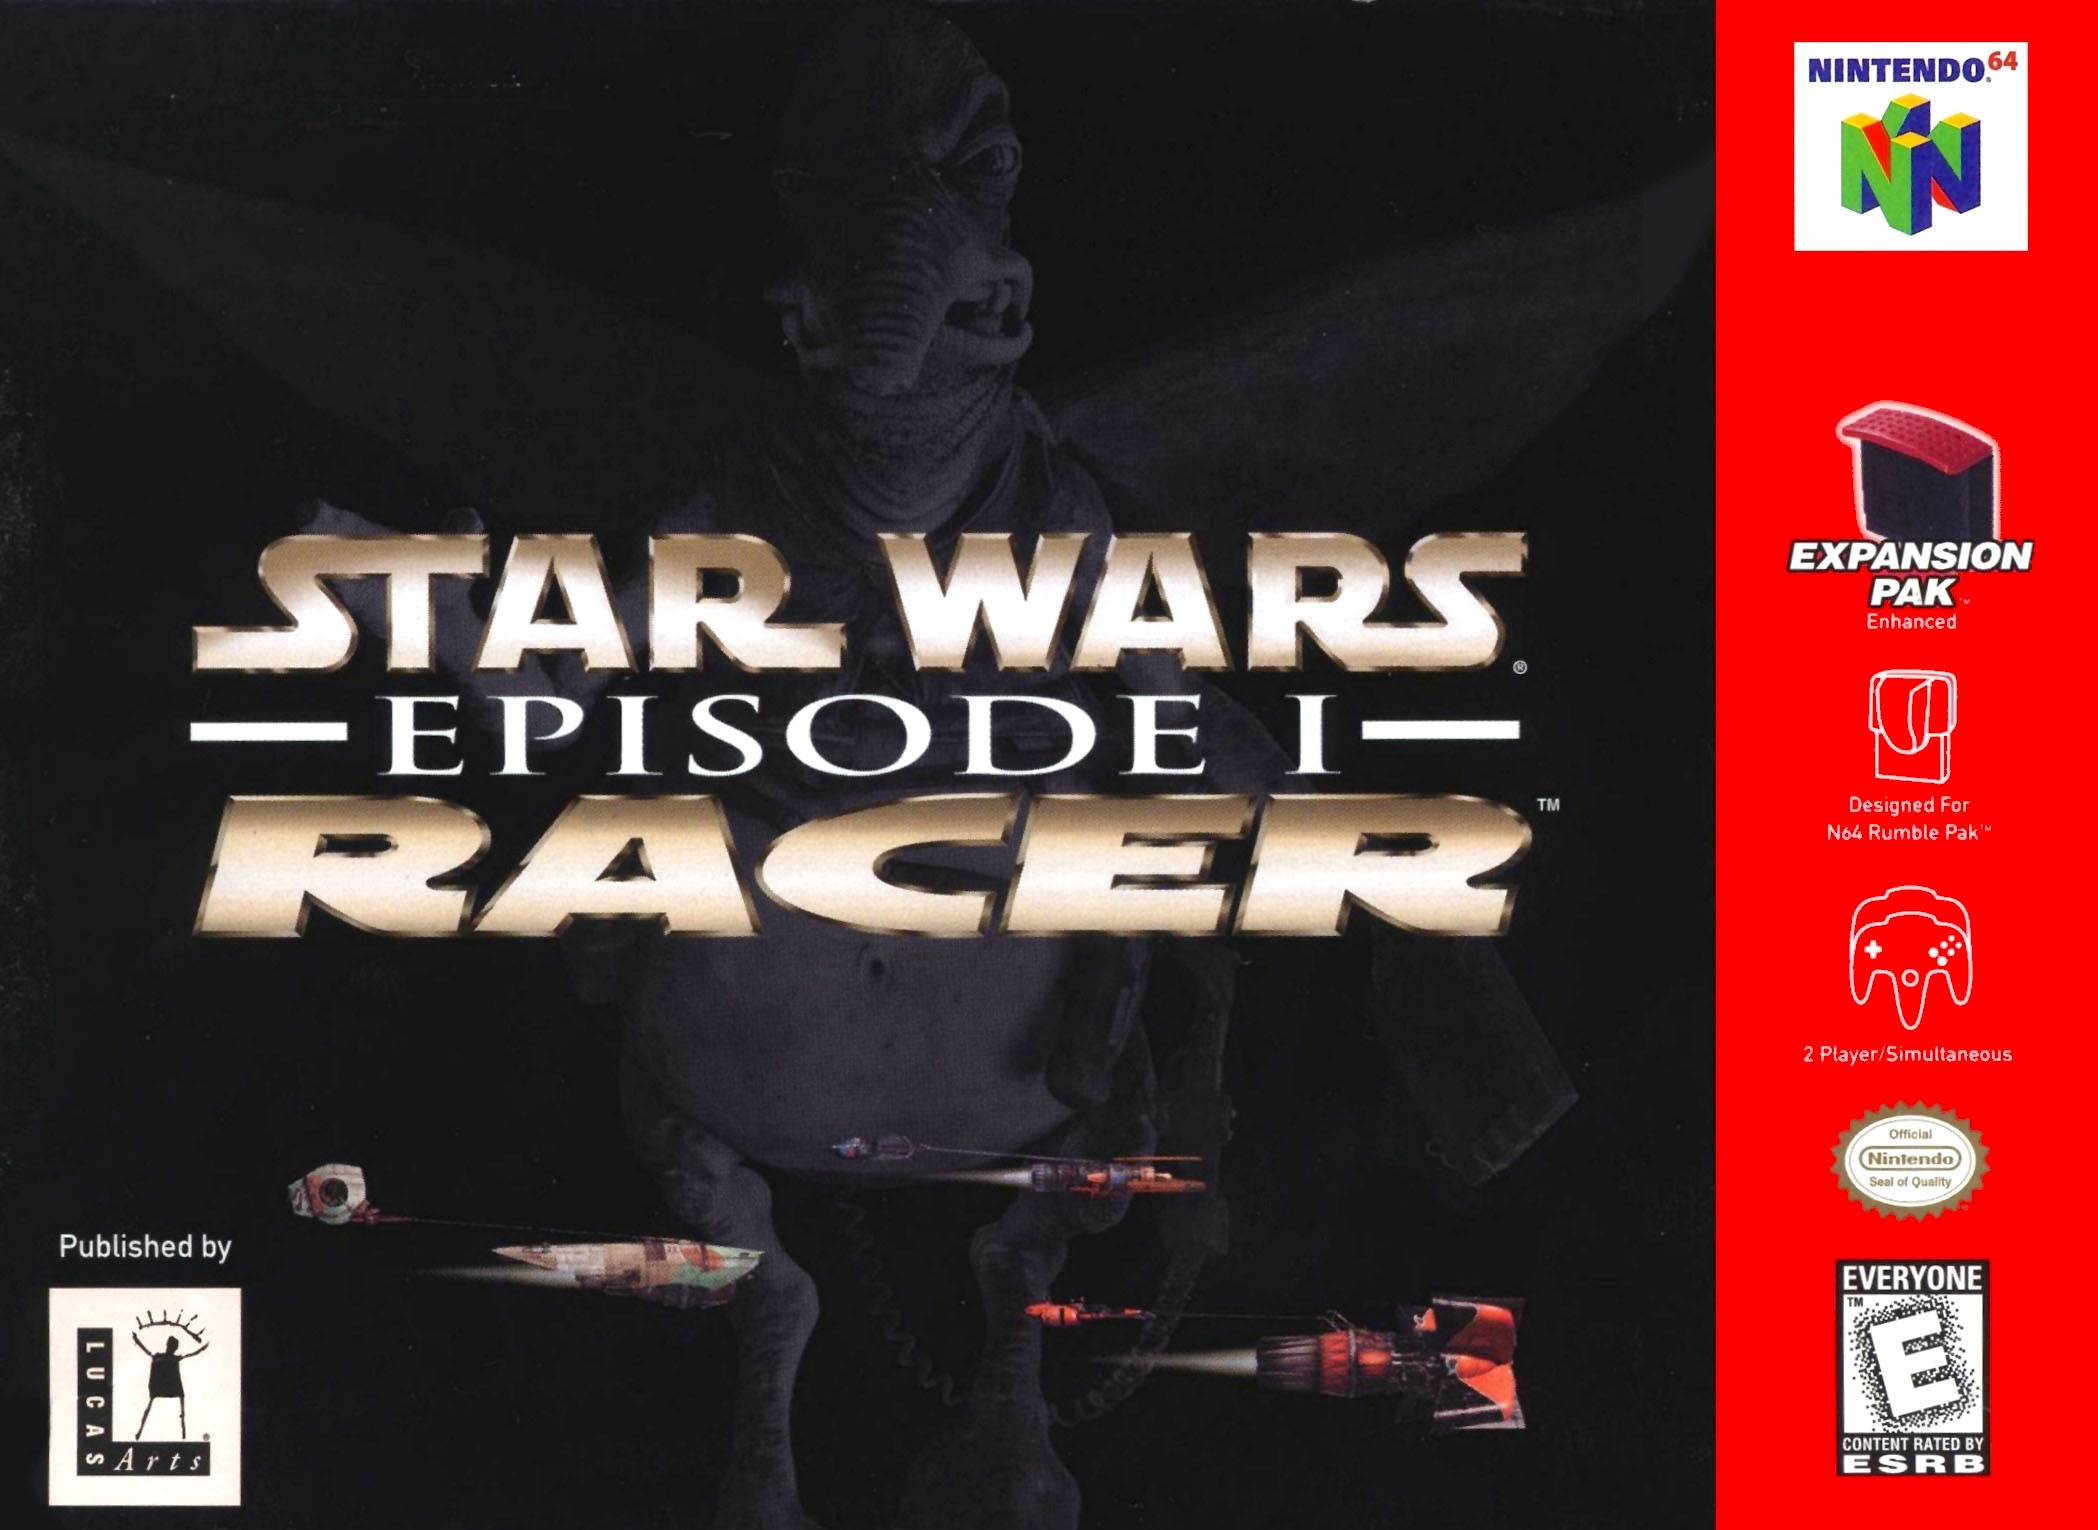 Star Wars Epidode 1 Racer (Csak a kazetta) - Nintendo 64 Játékok